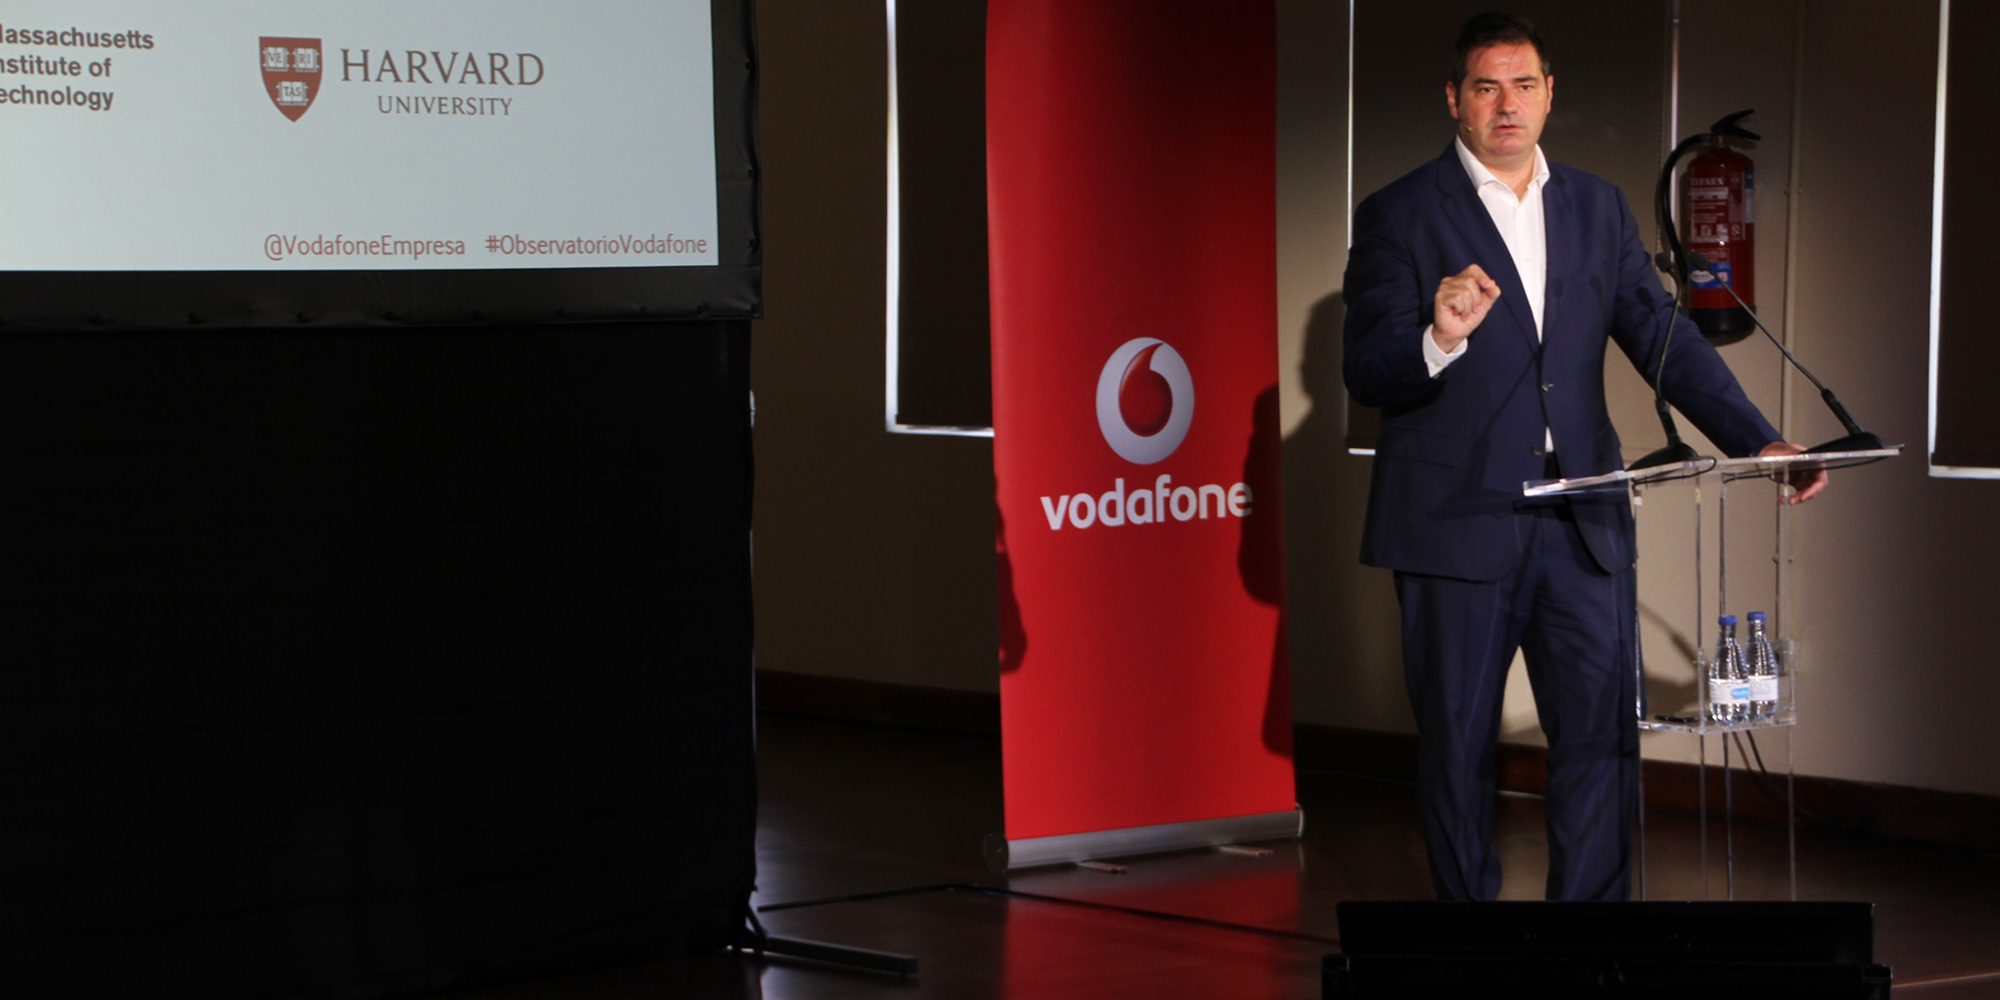 Andrs Vicente, director general de Empresas de Vodafone, present el Observatorio Vodafone de la Empresa